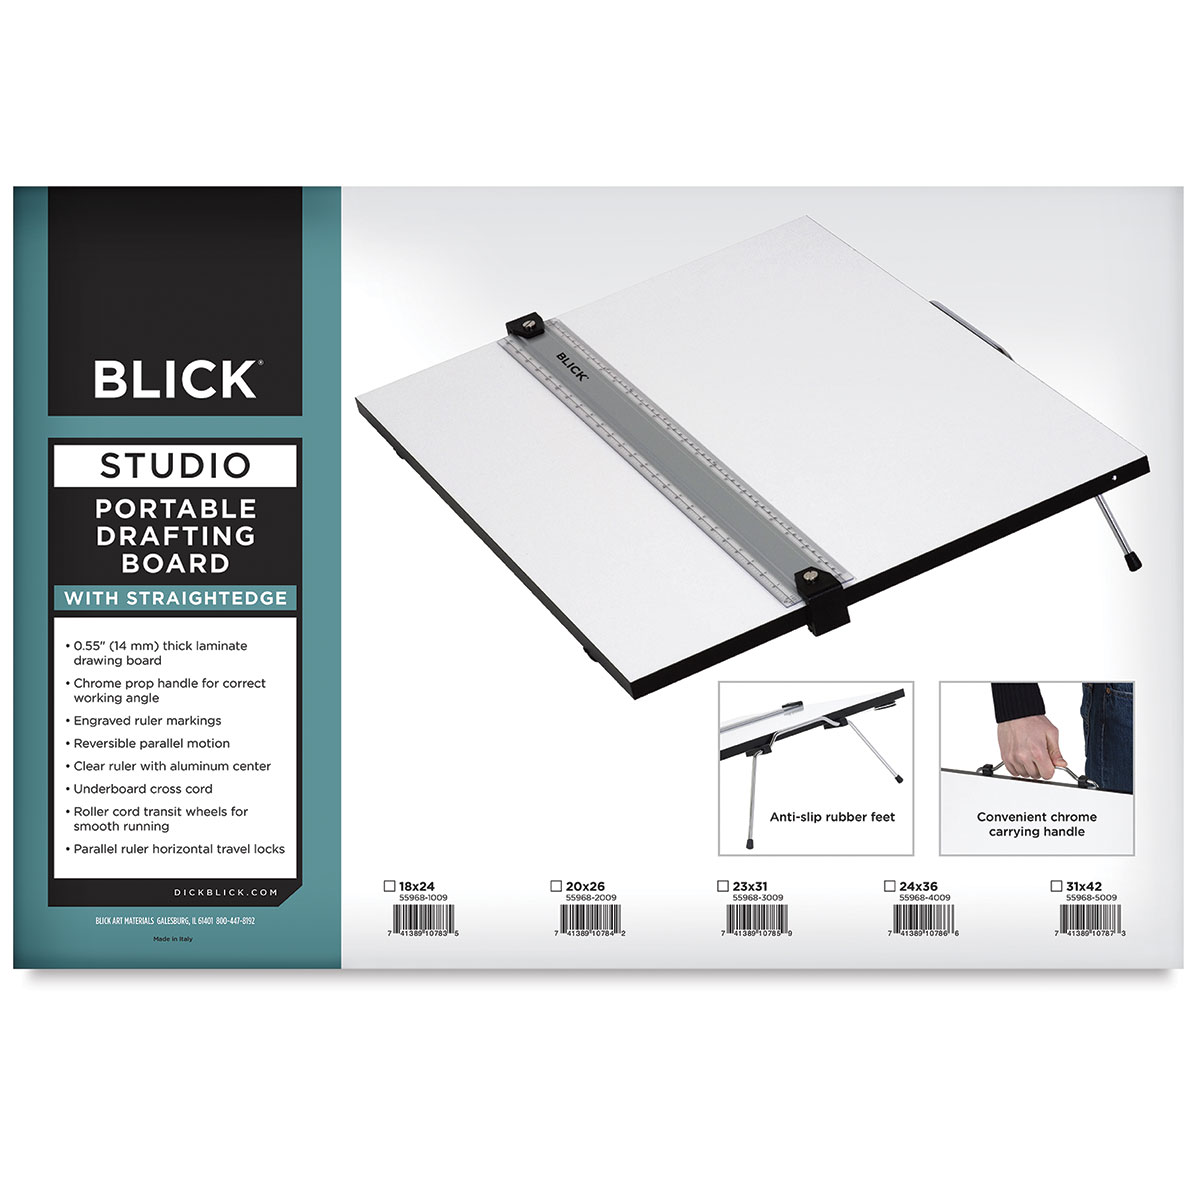 Blick Portable Drafting Board